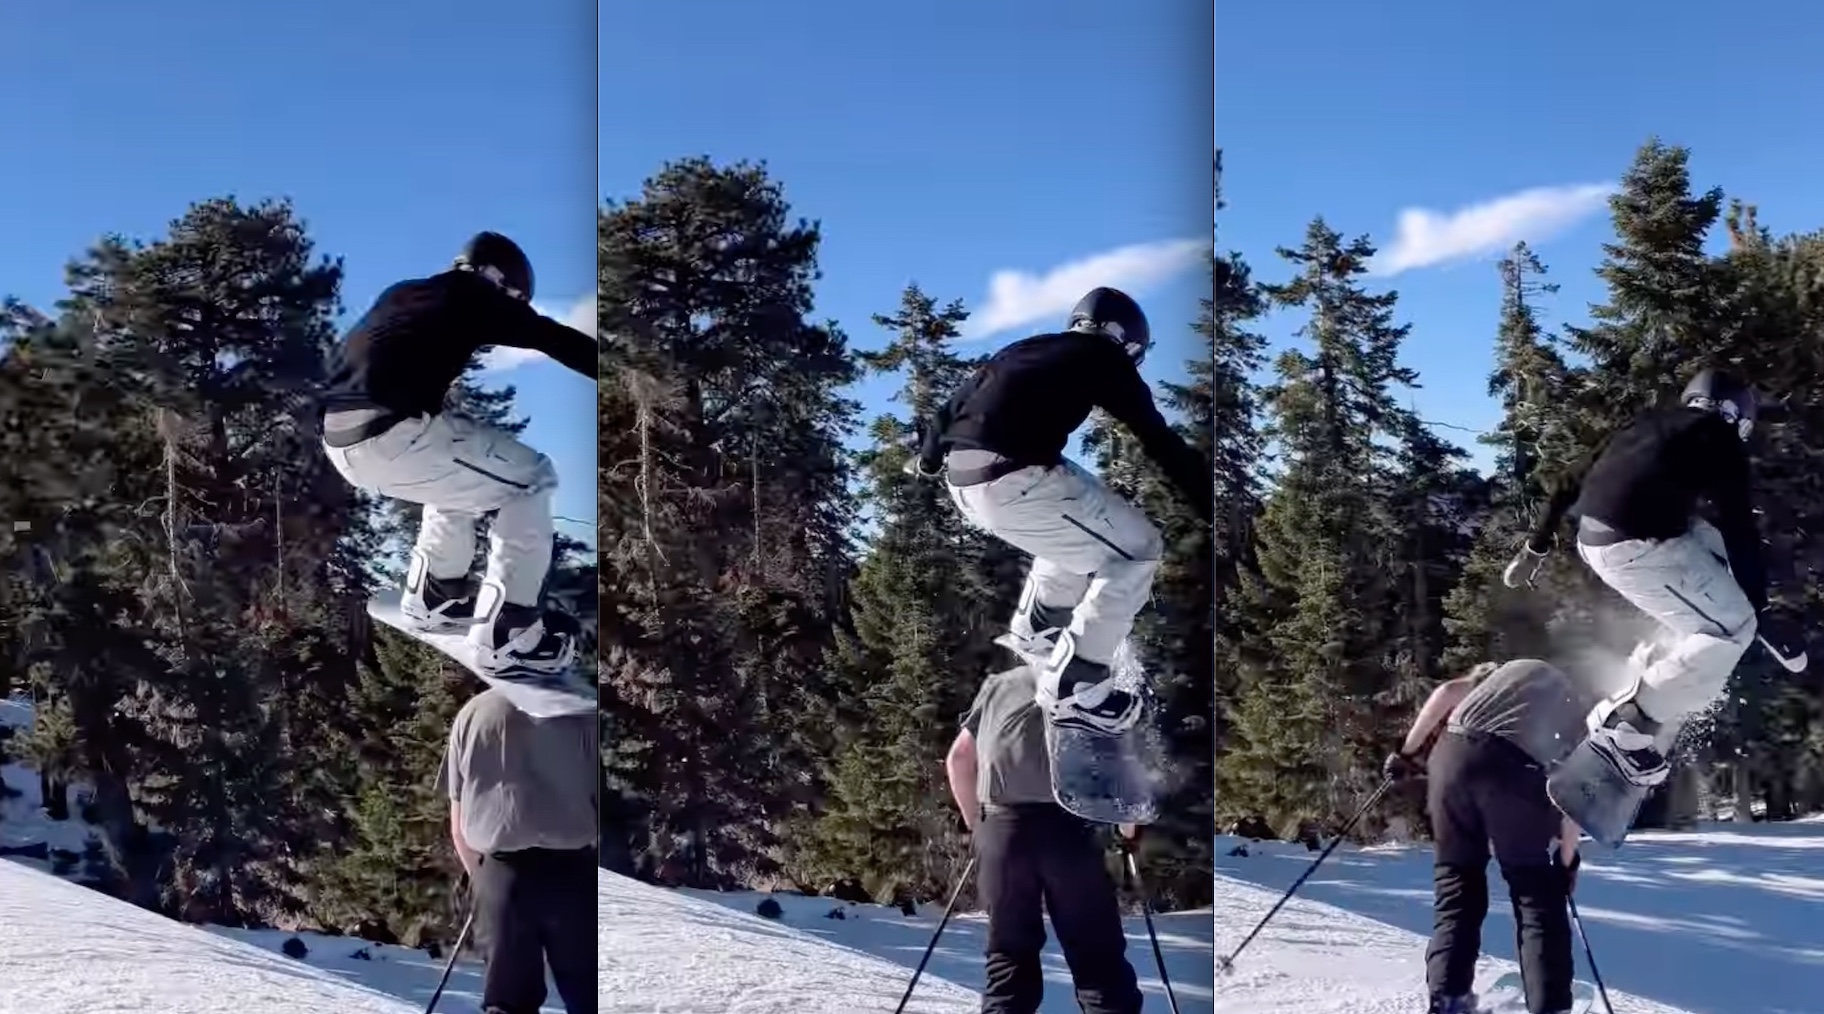 VIDEO: Skier In Landing Zone Decked In The Head By Snowboarder